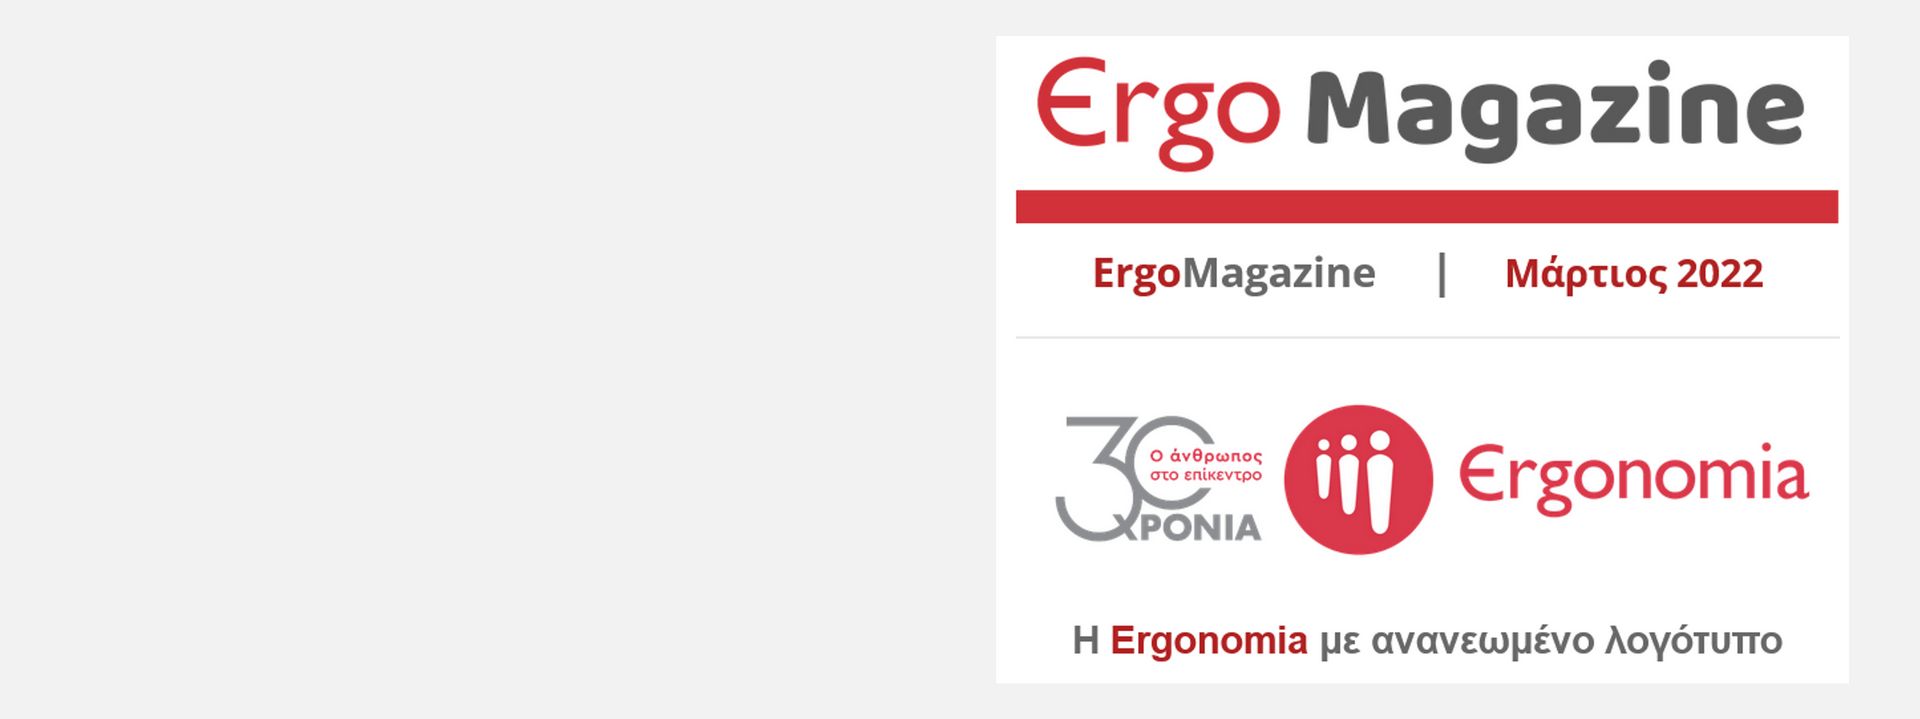 ErgoMagazine Mar 22